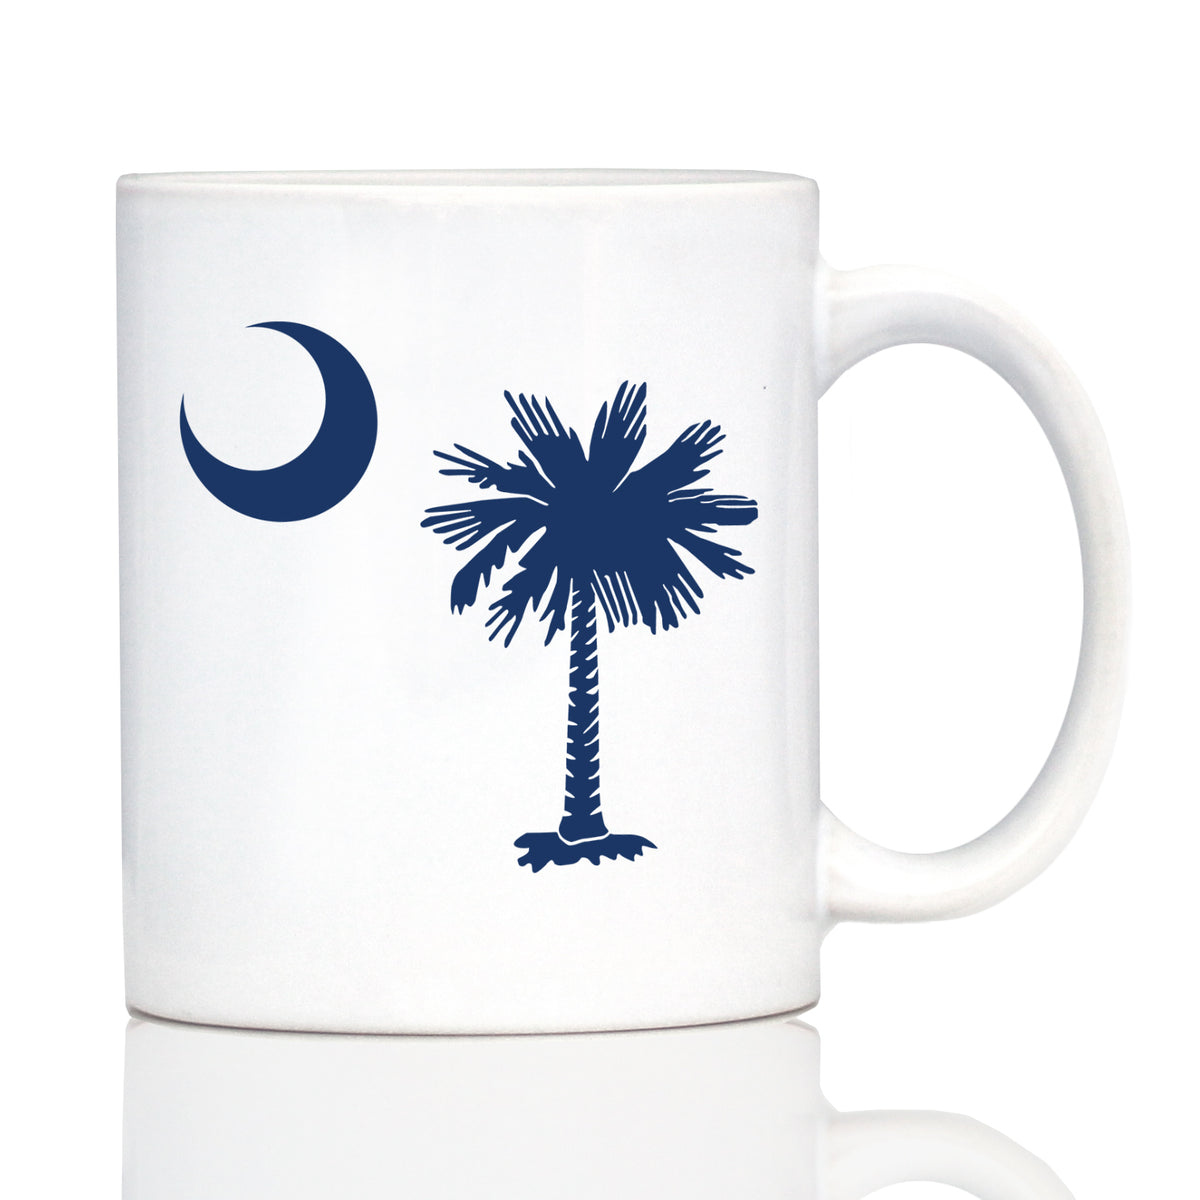 South Carolina Flag Coffee Mug - State Themed Drinking Decor and Gifts for South Carolinians